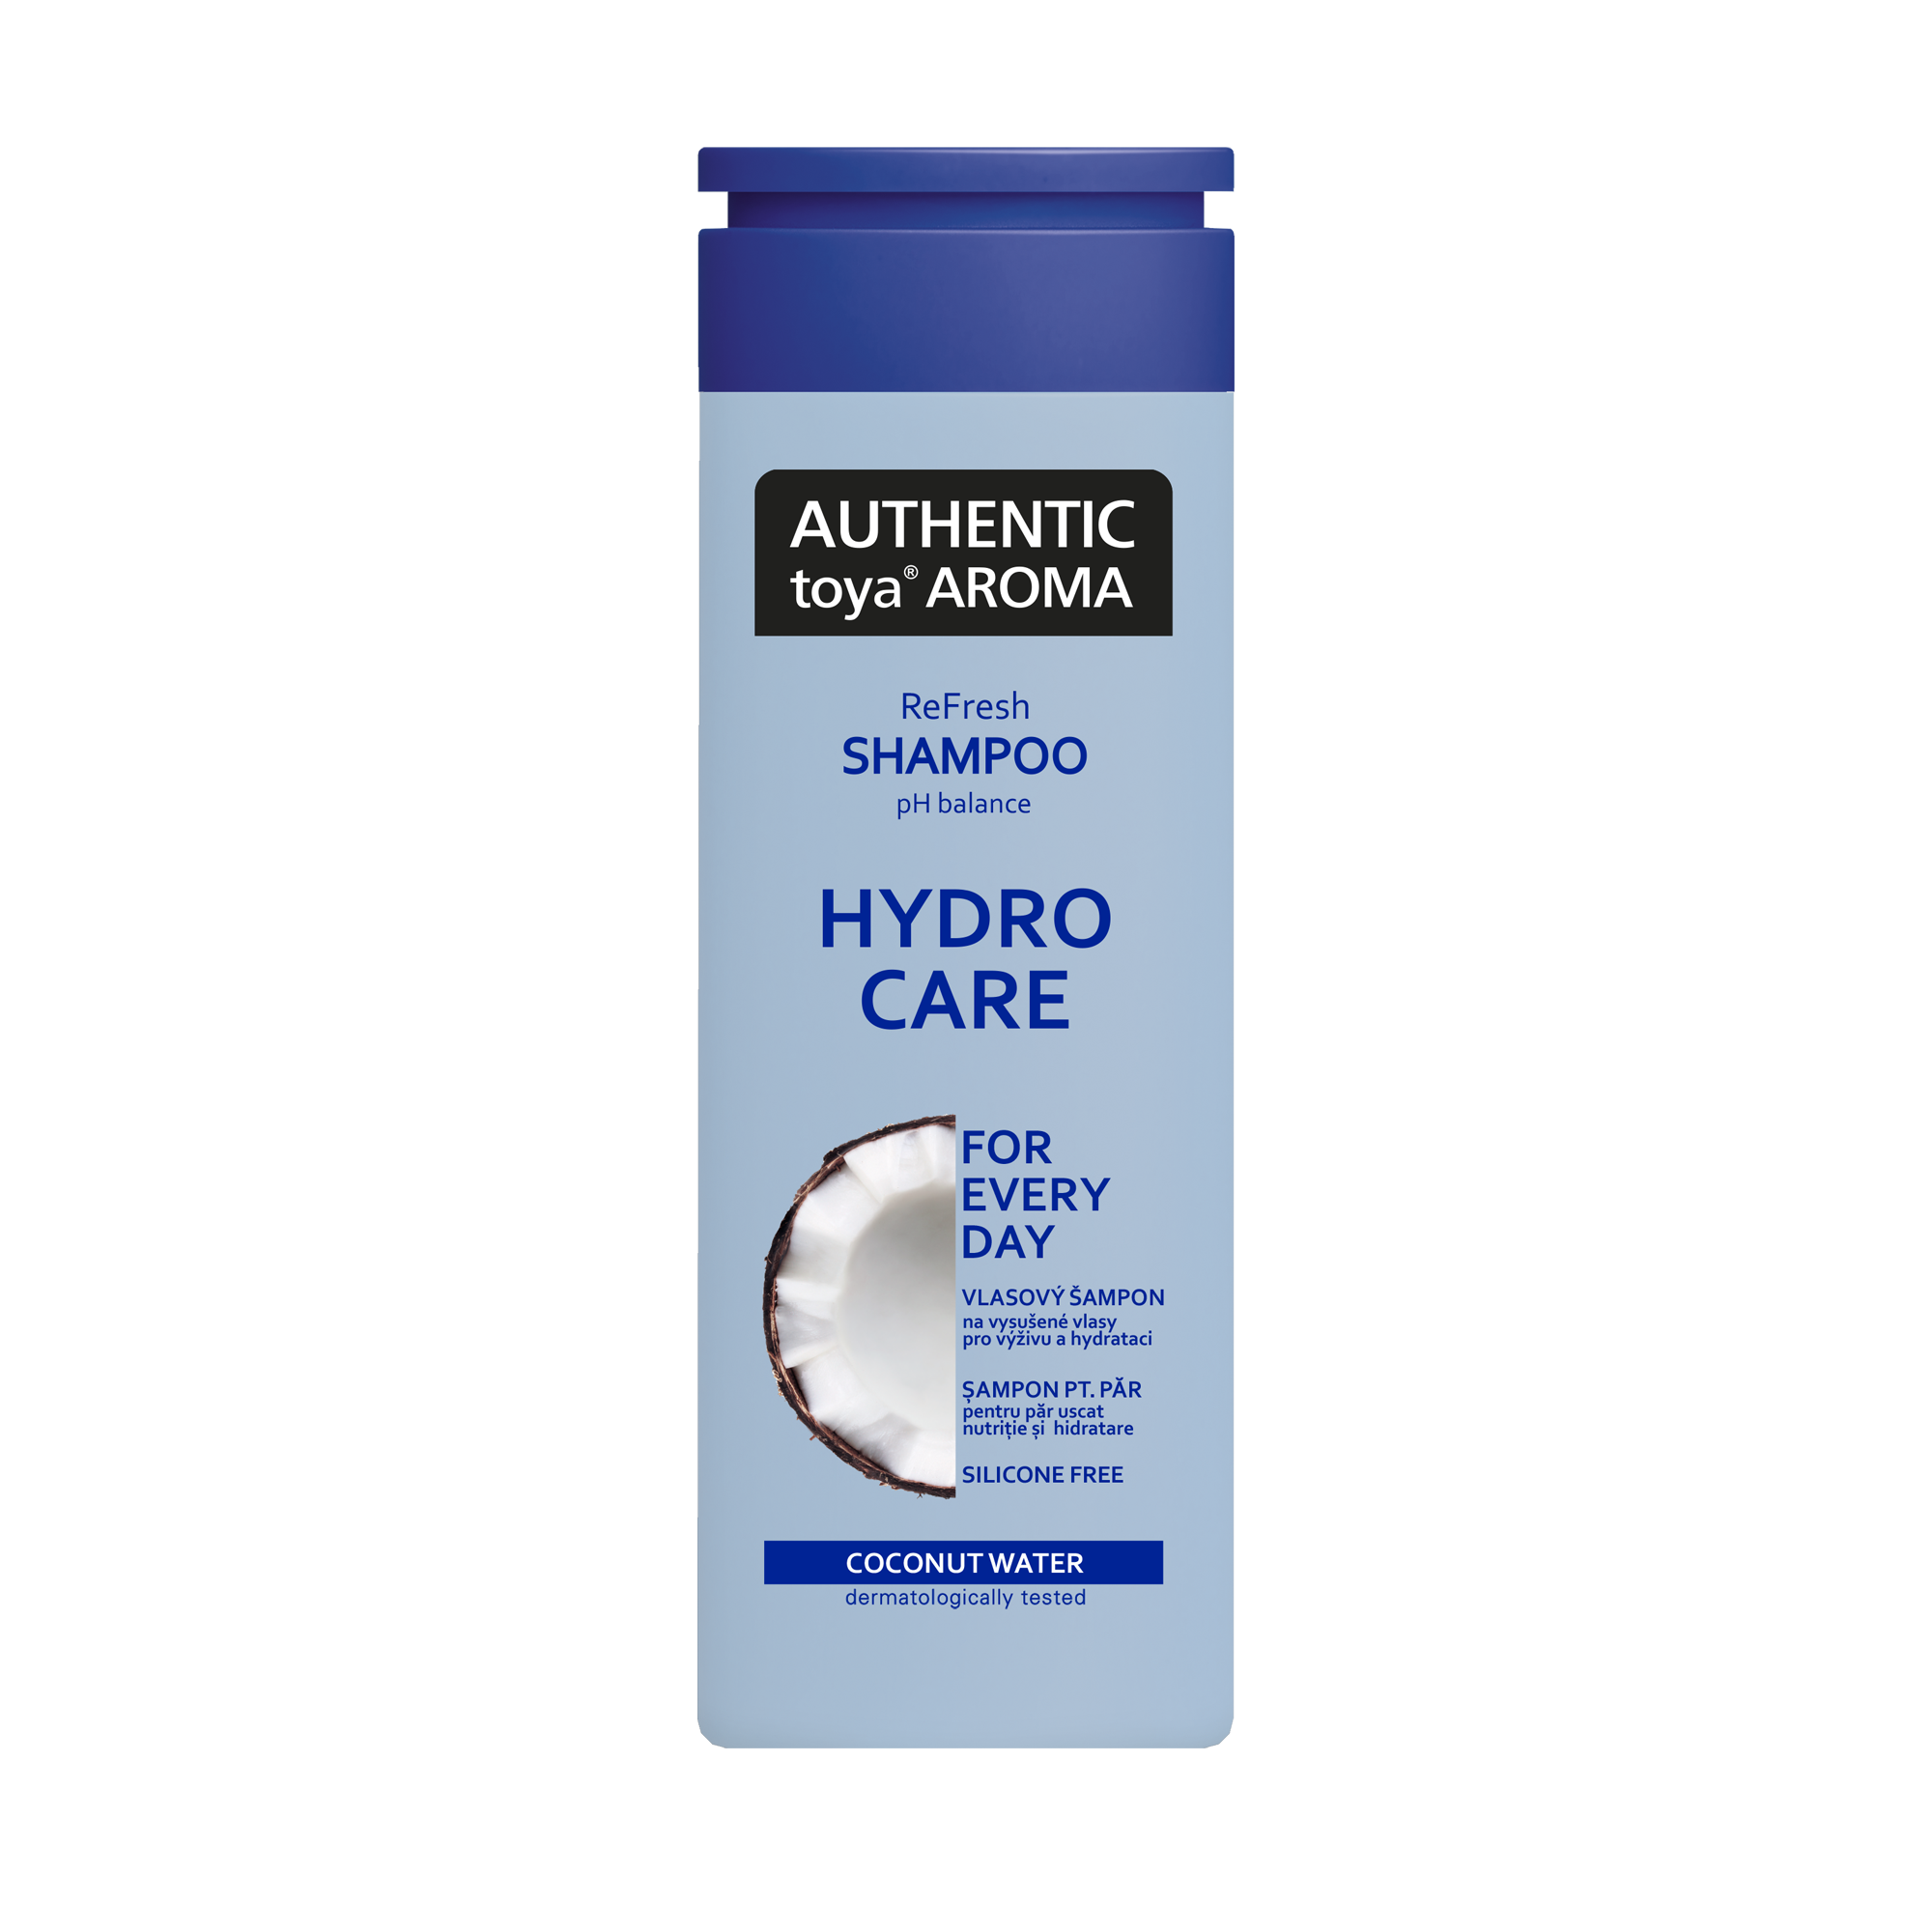 AUTHENTIC toya AROMA vlasový šampón Hydro Care